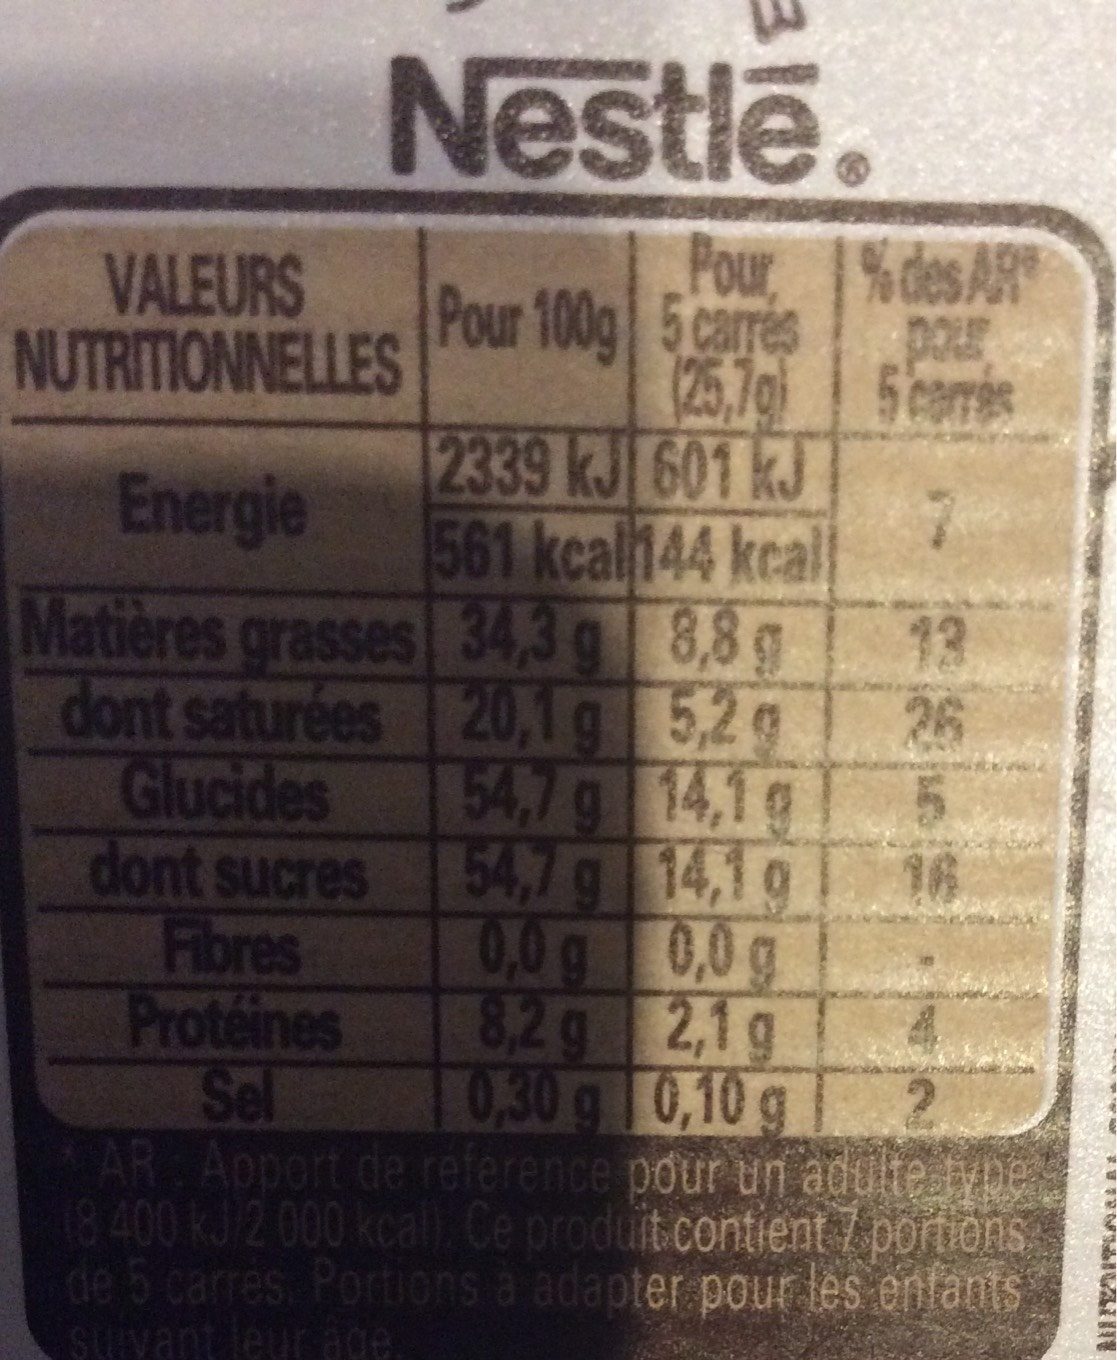 NESTLE DESSERT Blanc 2 x 180g - Tableau nutritionnel